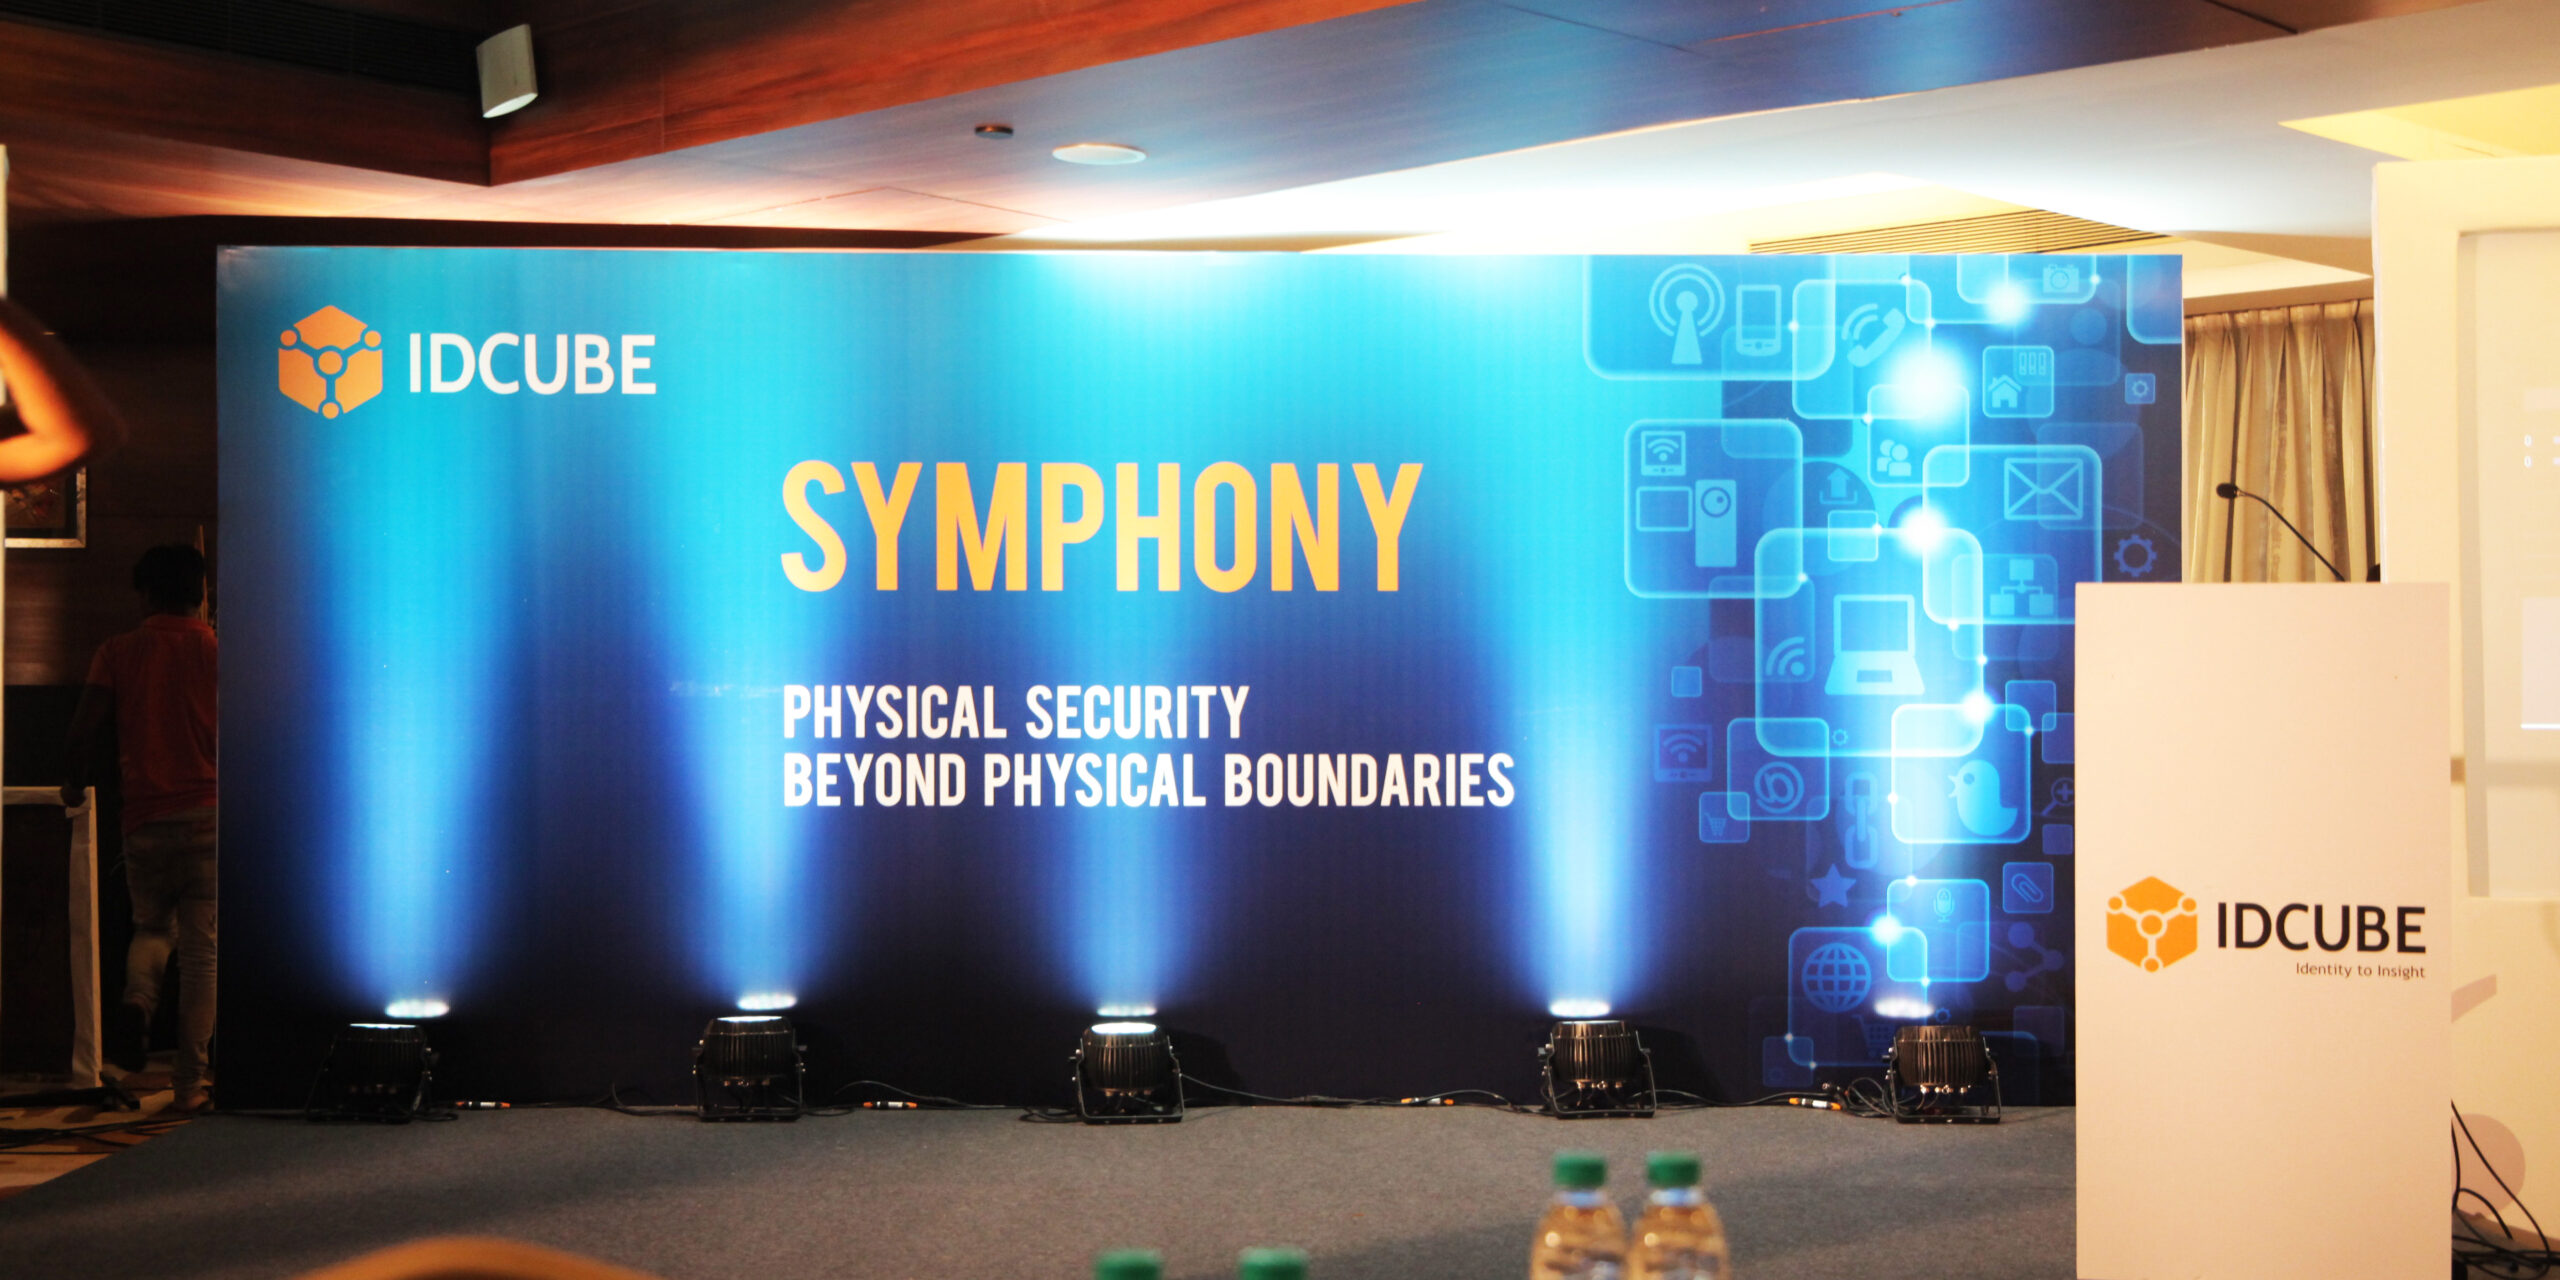 Symphony Event Mumbai – IDCUBE